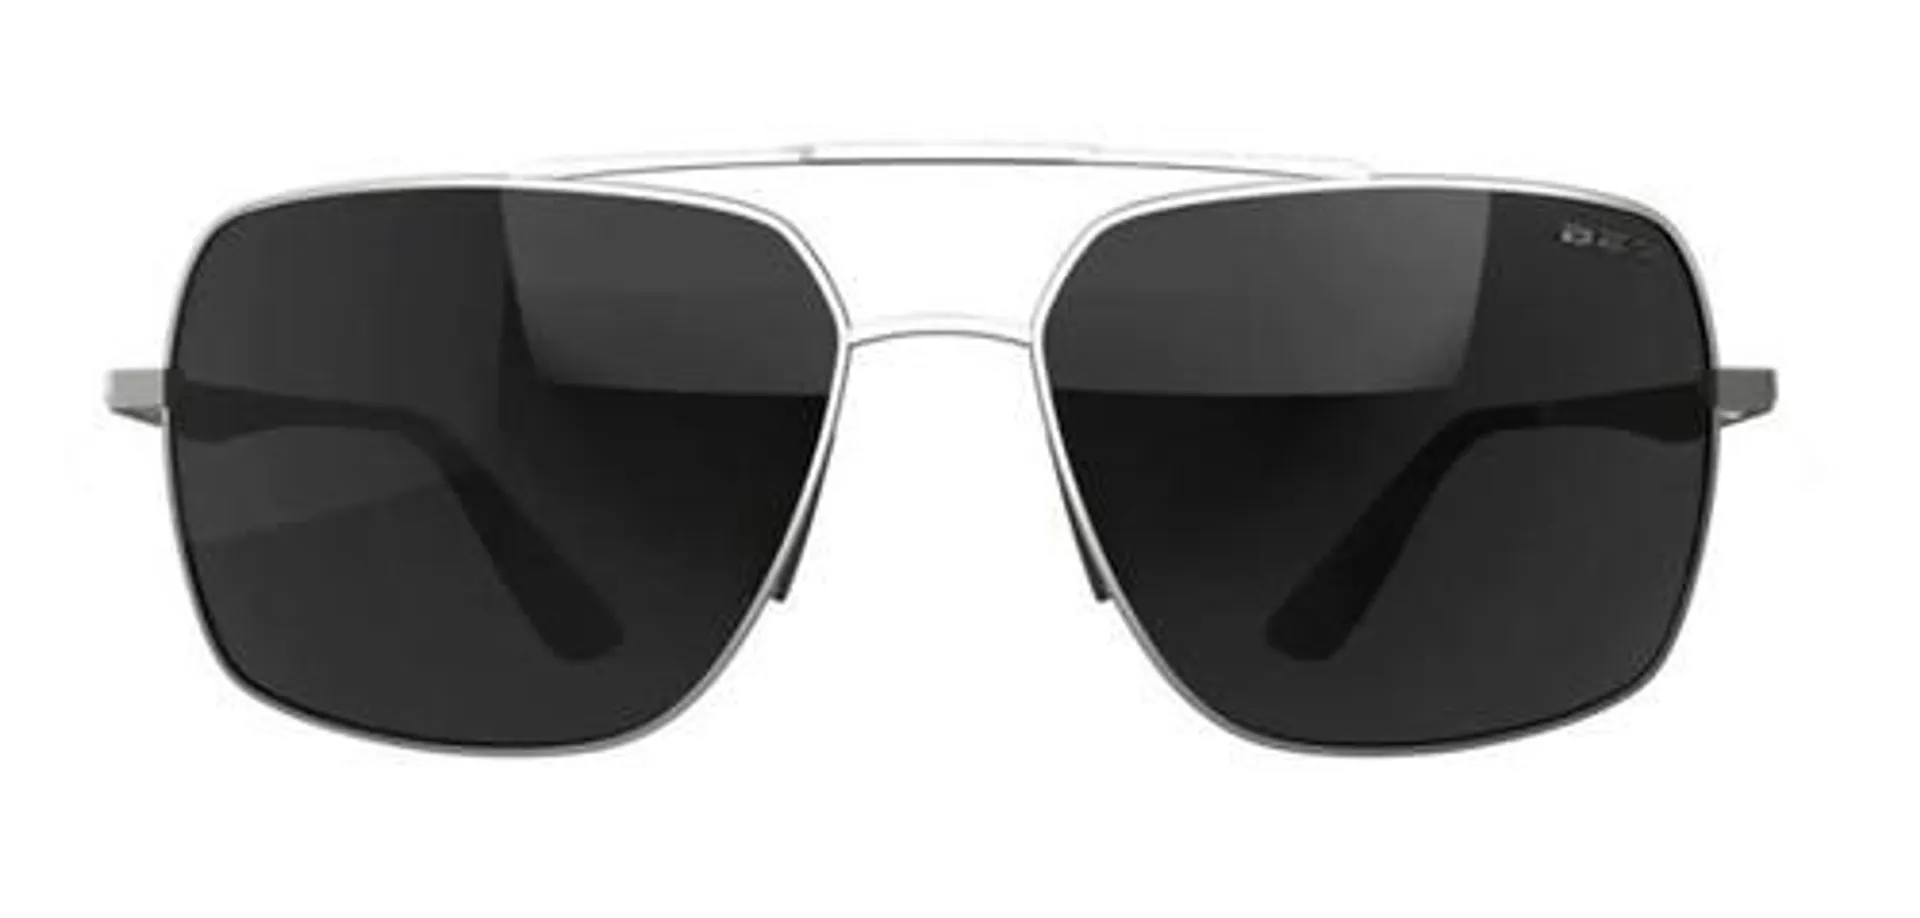 Bex Sunglasses Wing in Matte Silver Gray